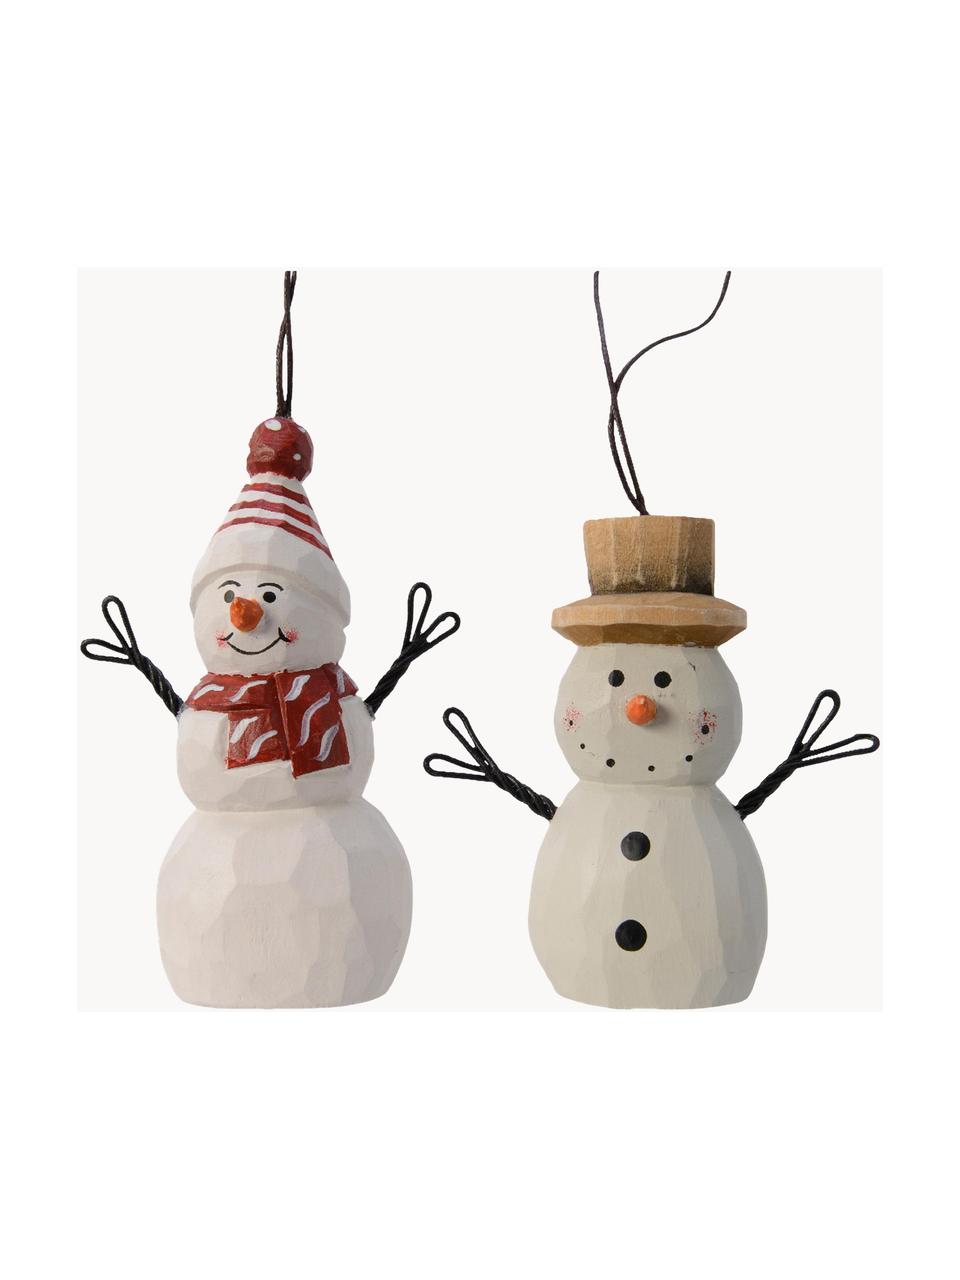 Sada ozdob na stromeček Snowman, 2 díly, Dřevo, Bílá, béžová, červená, černá, Sada s různými velikostmi